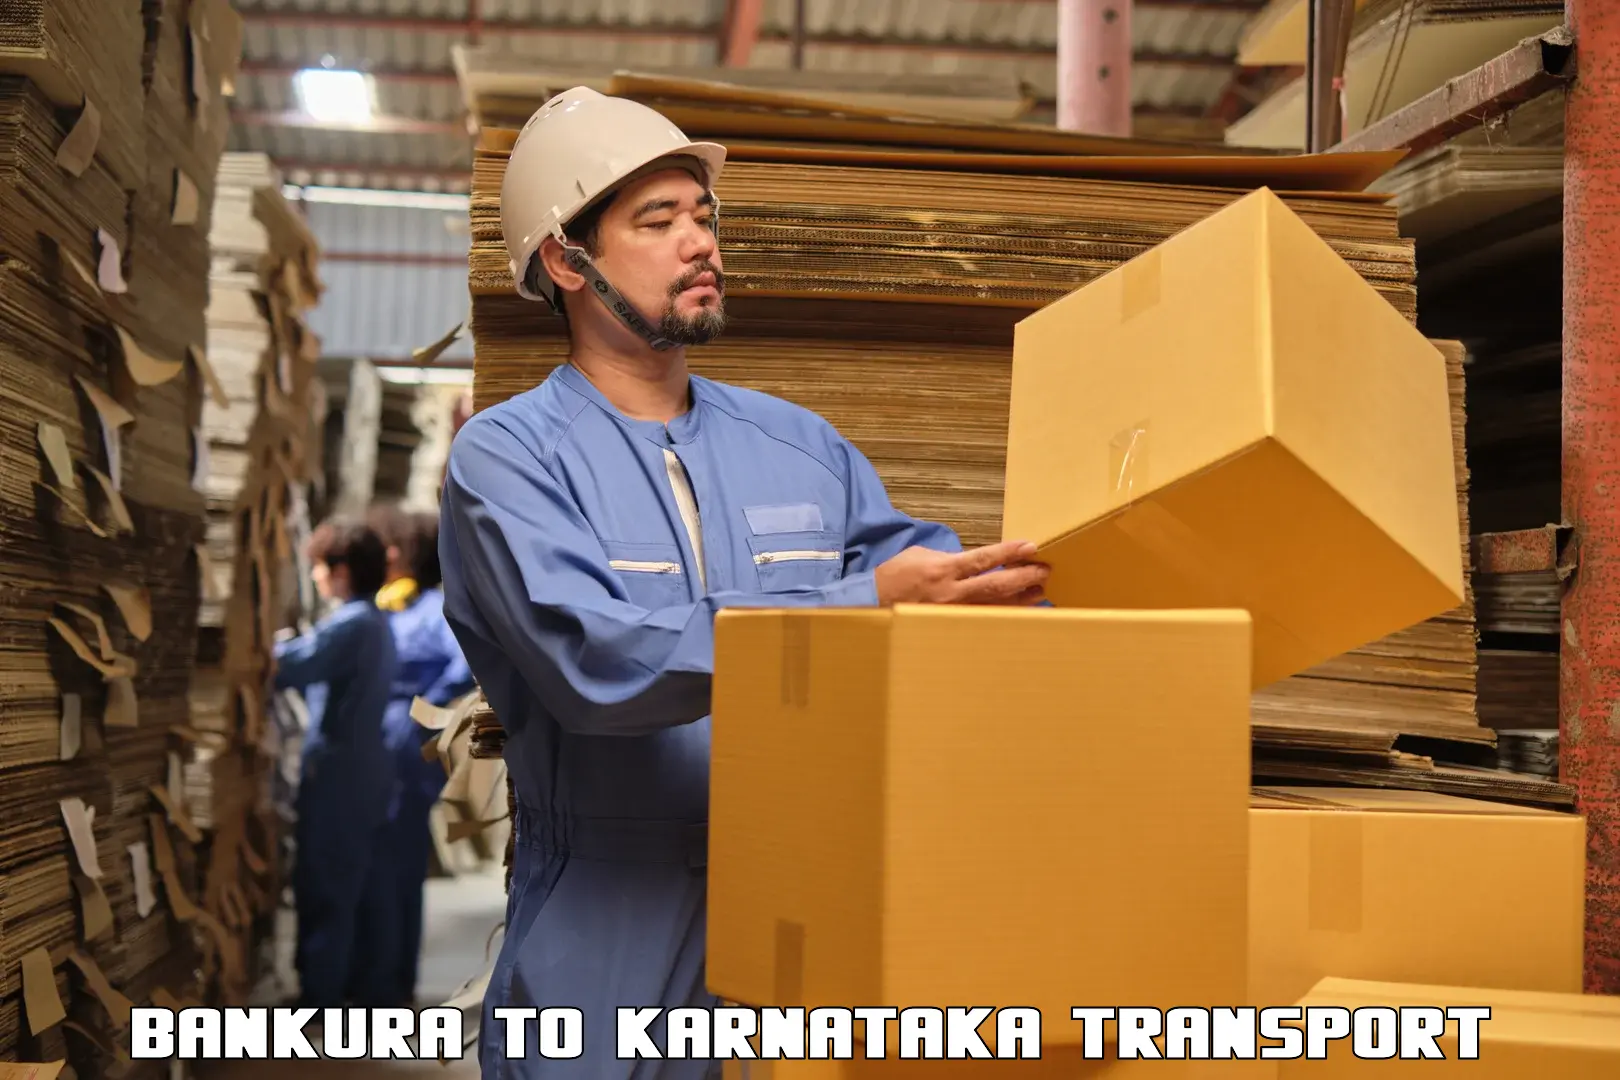 Commercial transport service Bankura to Karnataka